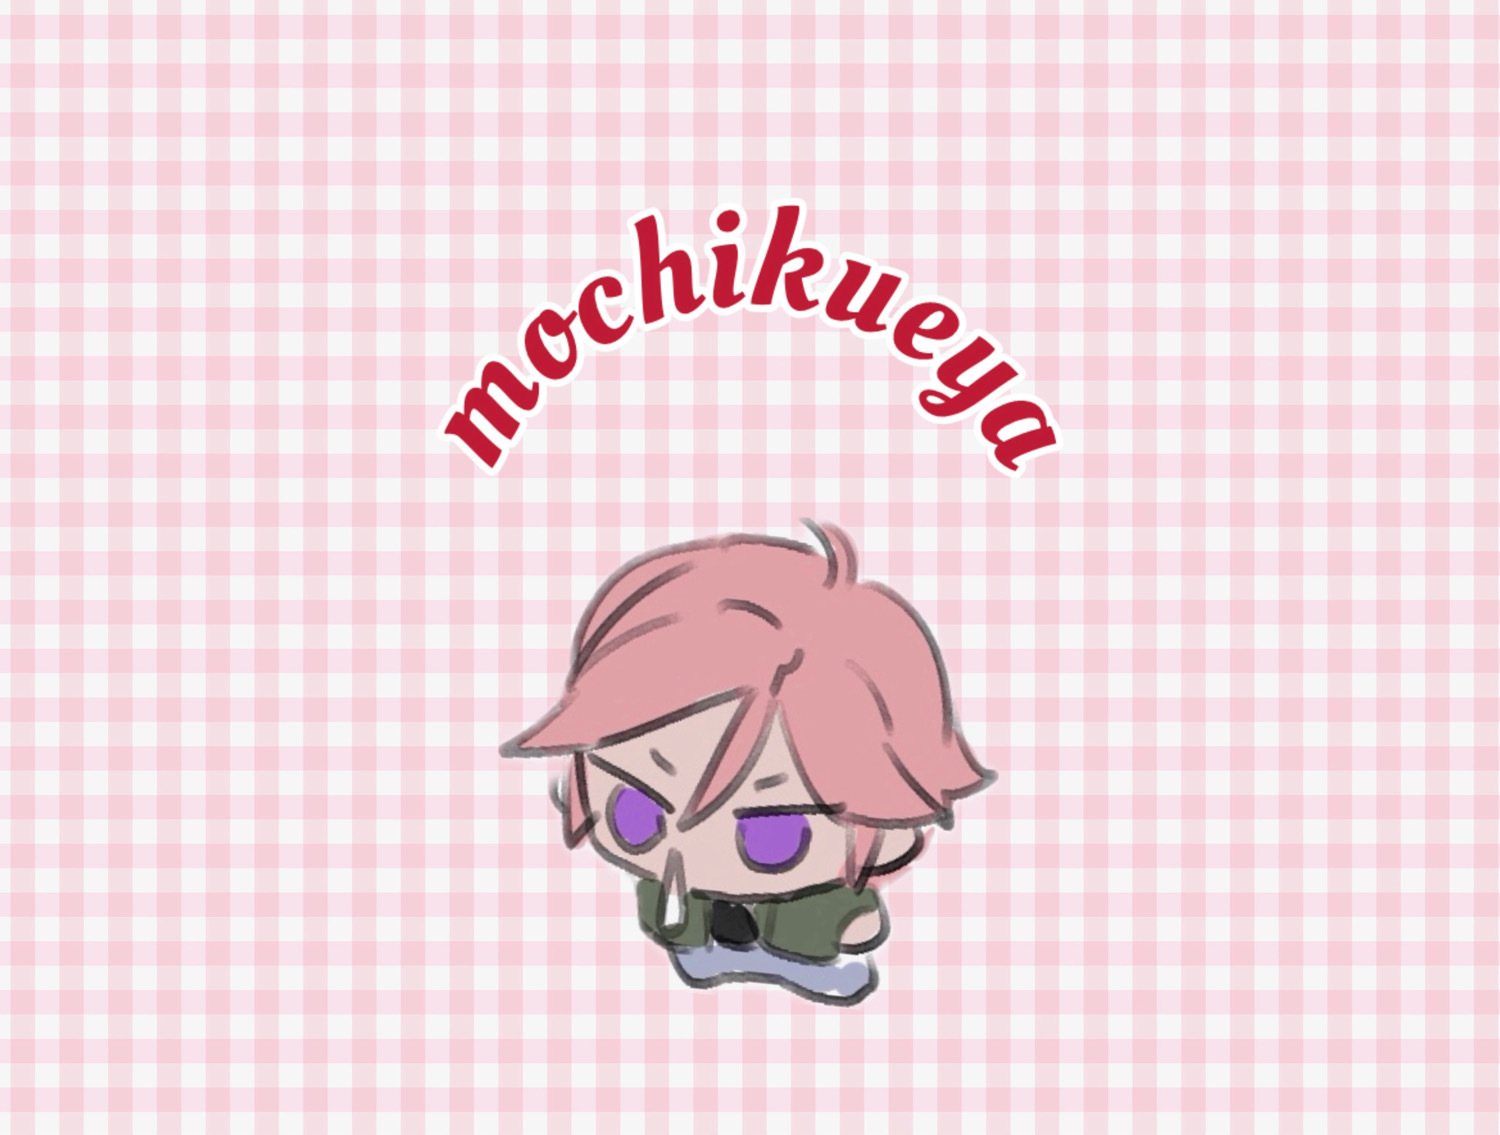 mochikueya